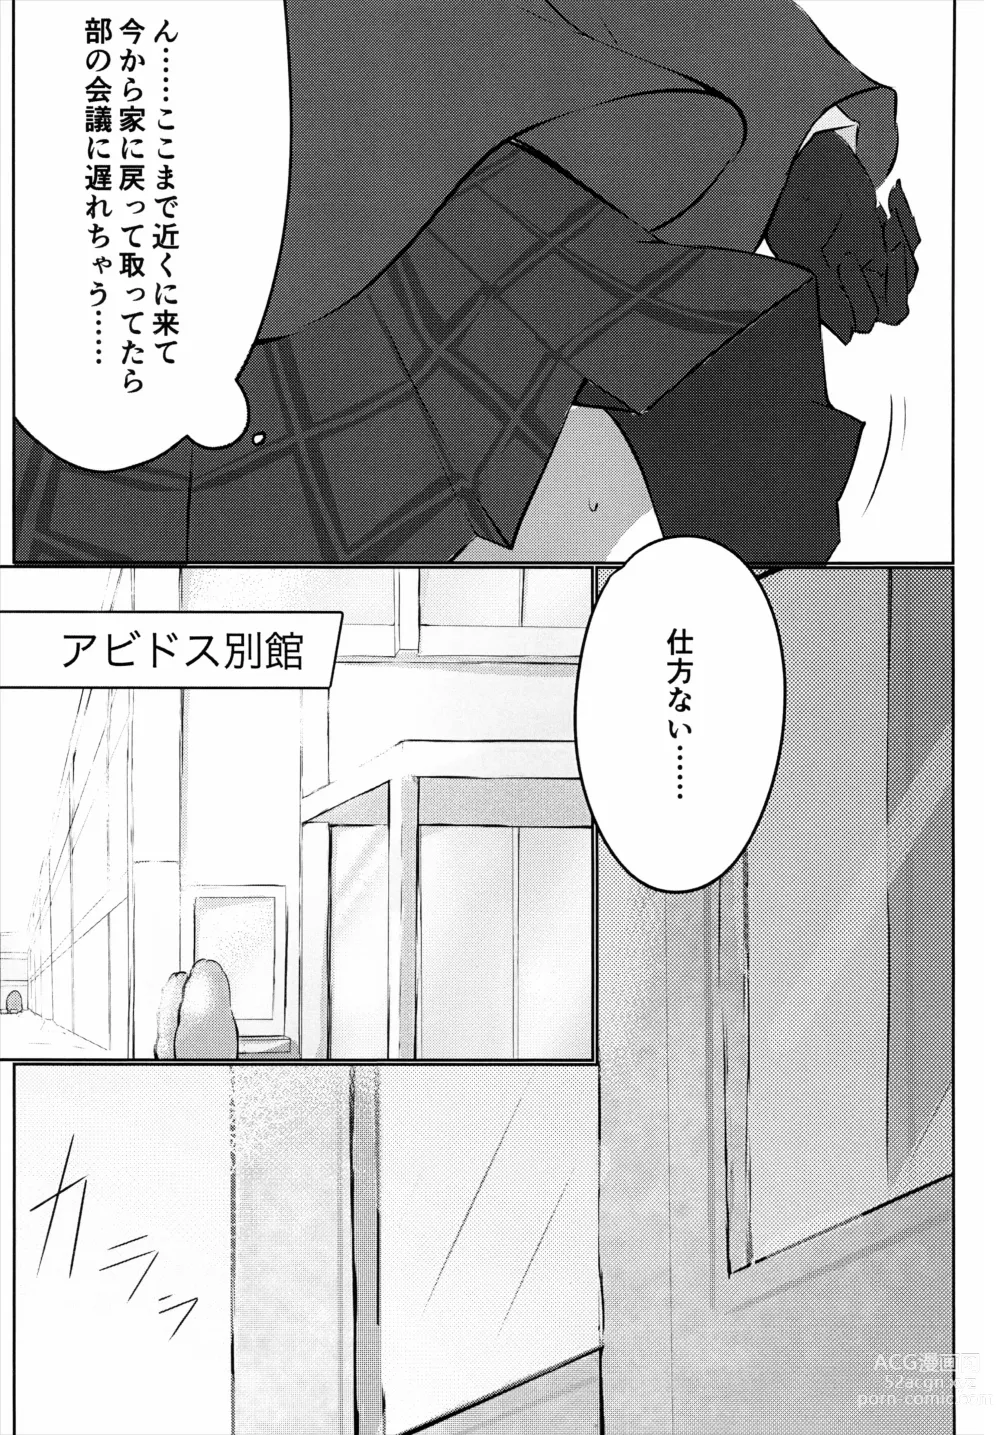 Page 4 of doujinshi Hakusyoku Aisei